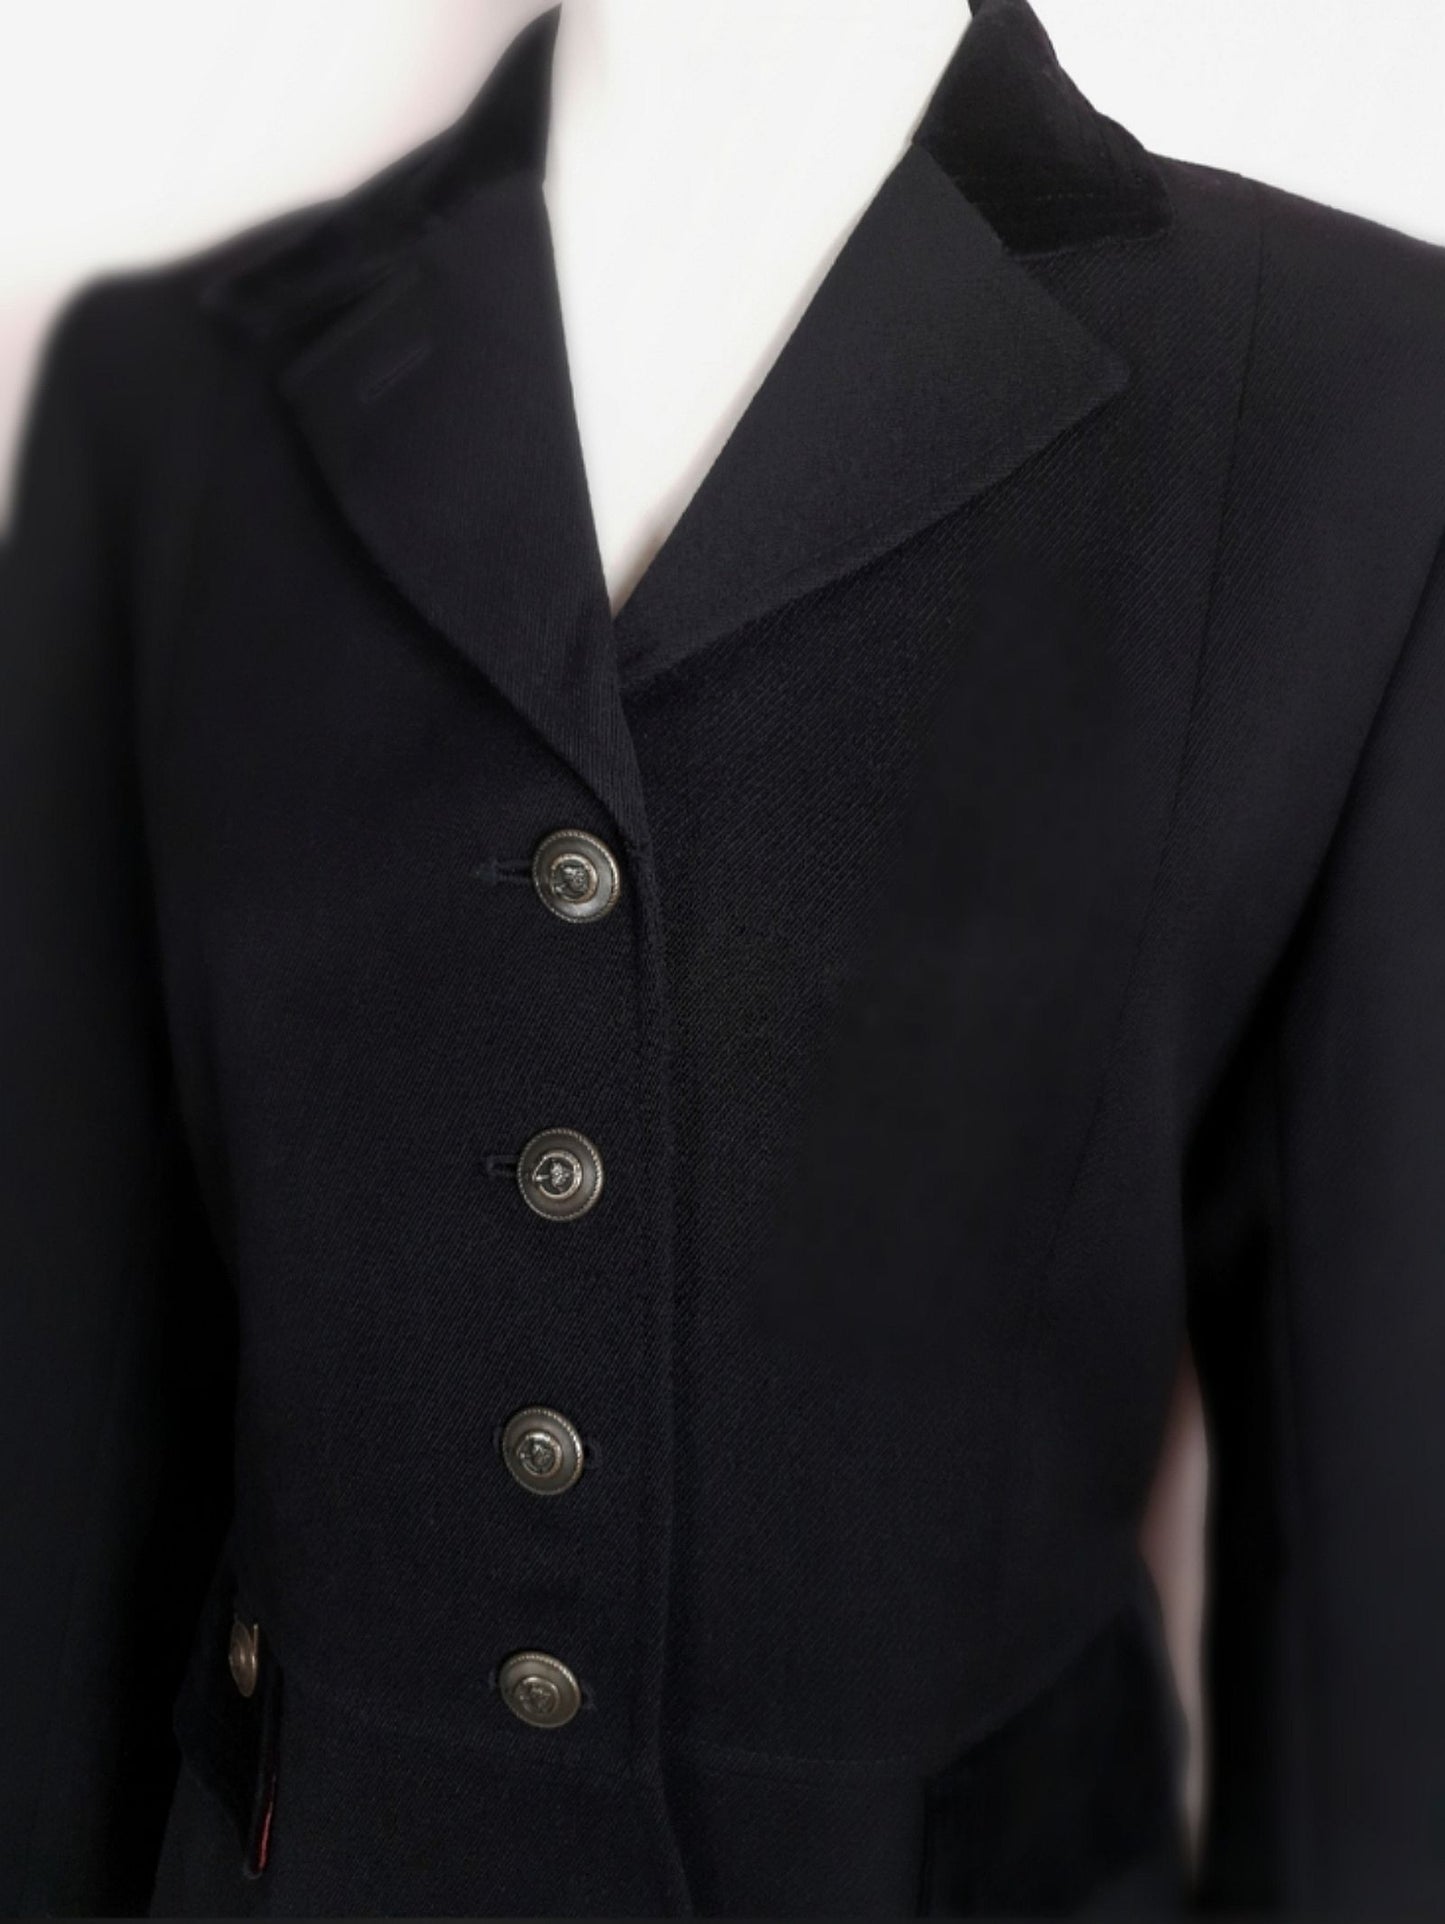 English Classics - Vintage 1990s Mulberry Black Wool and Velvet Jacket Blazer - Size 12/14